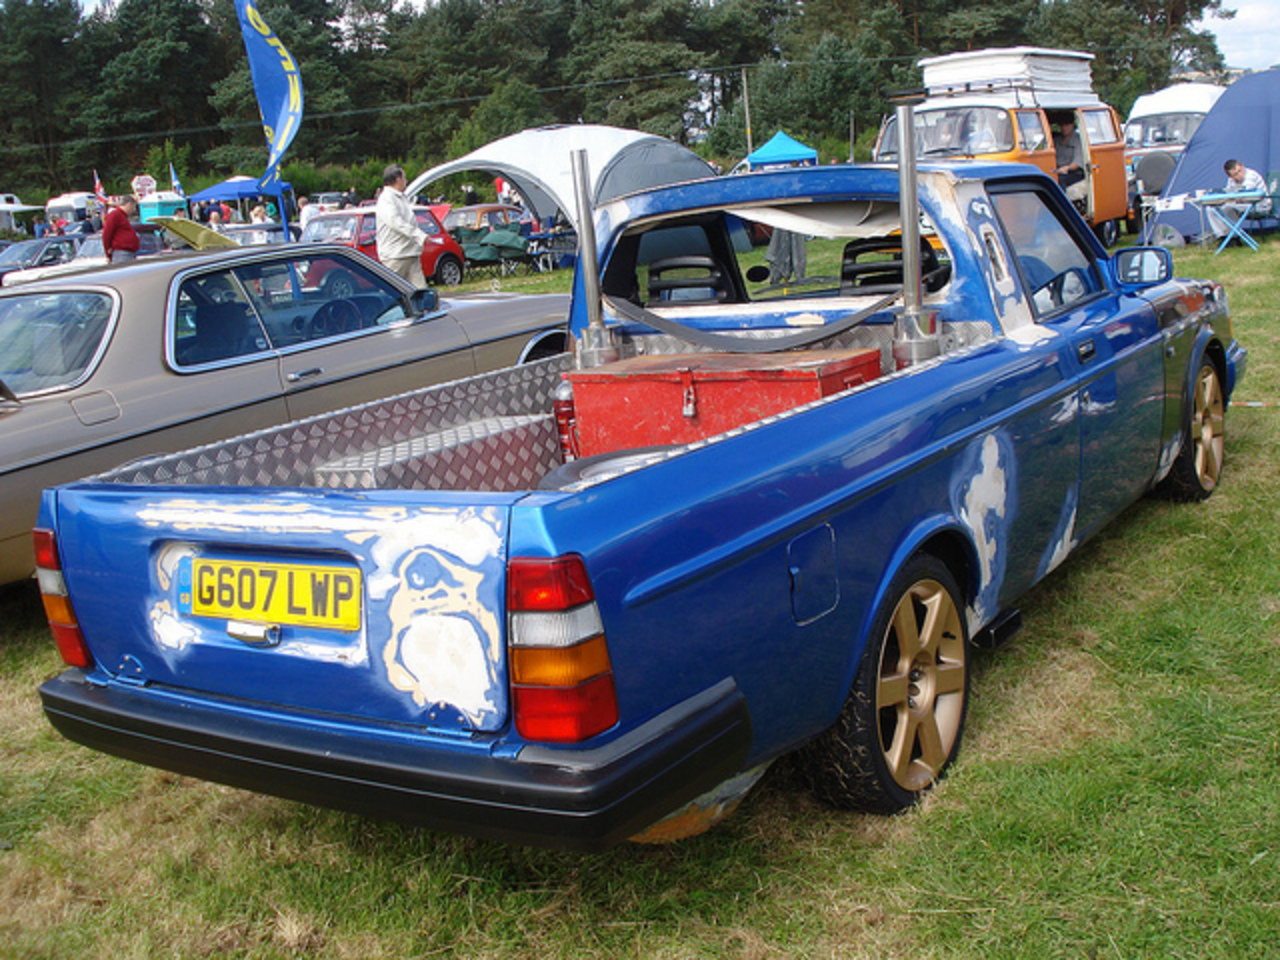 1989 Volvo 240 GLT Estate now Pick-up | Flickr - Photo Sharing!